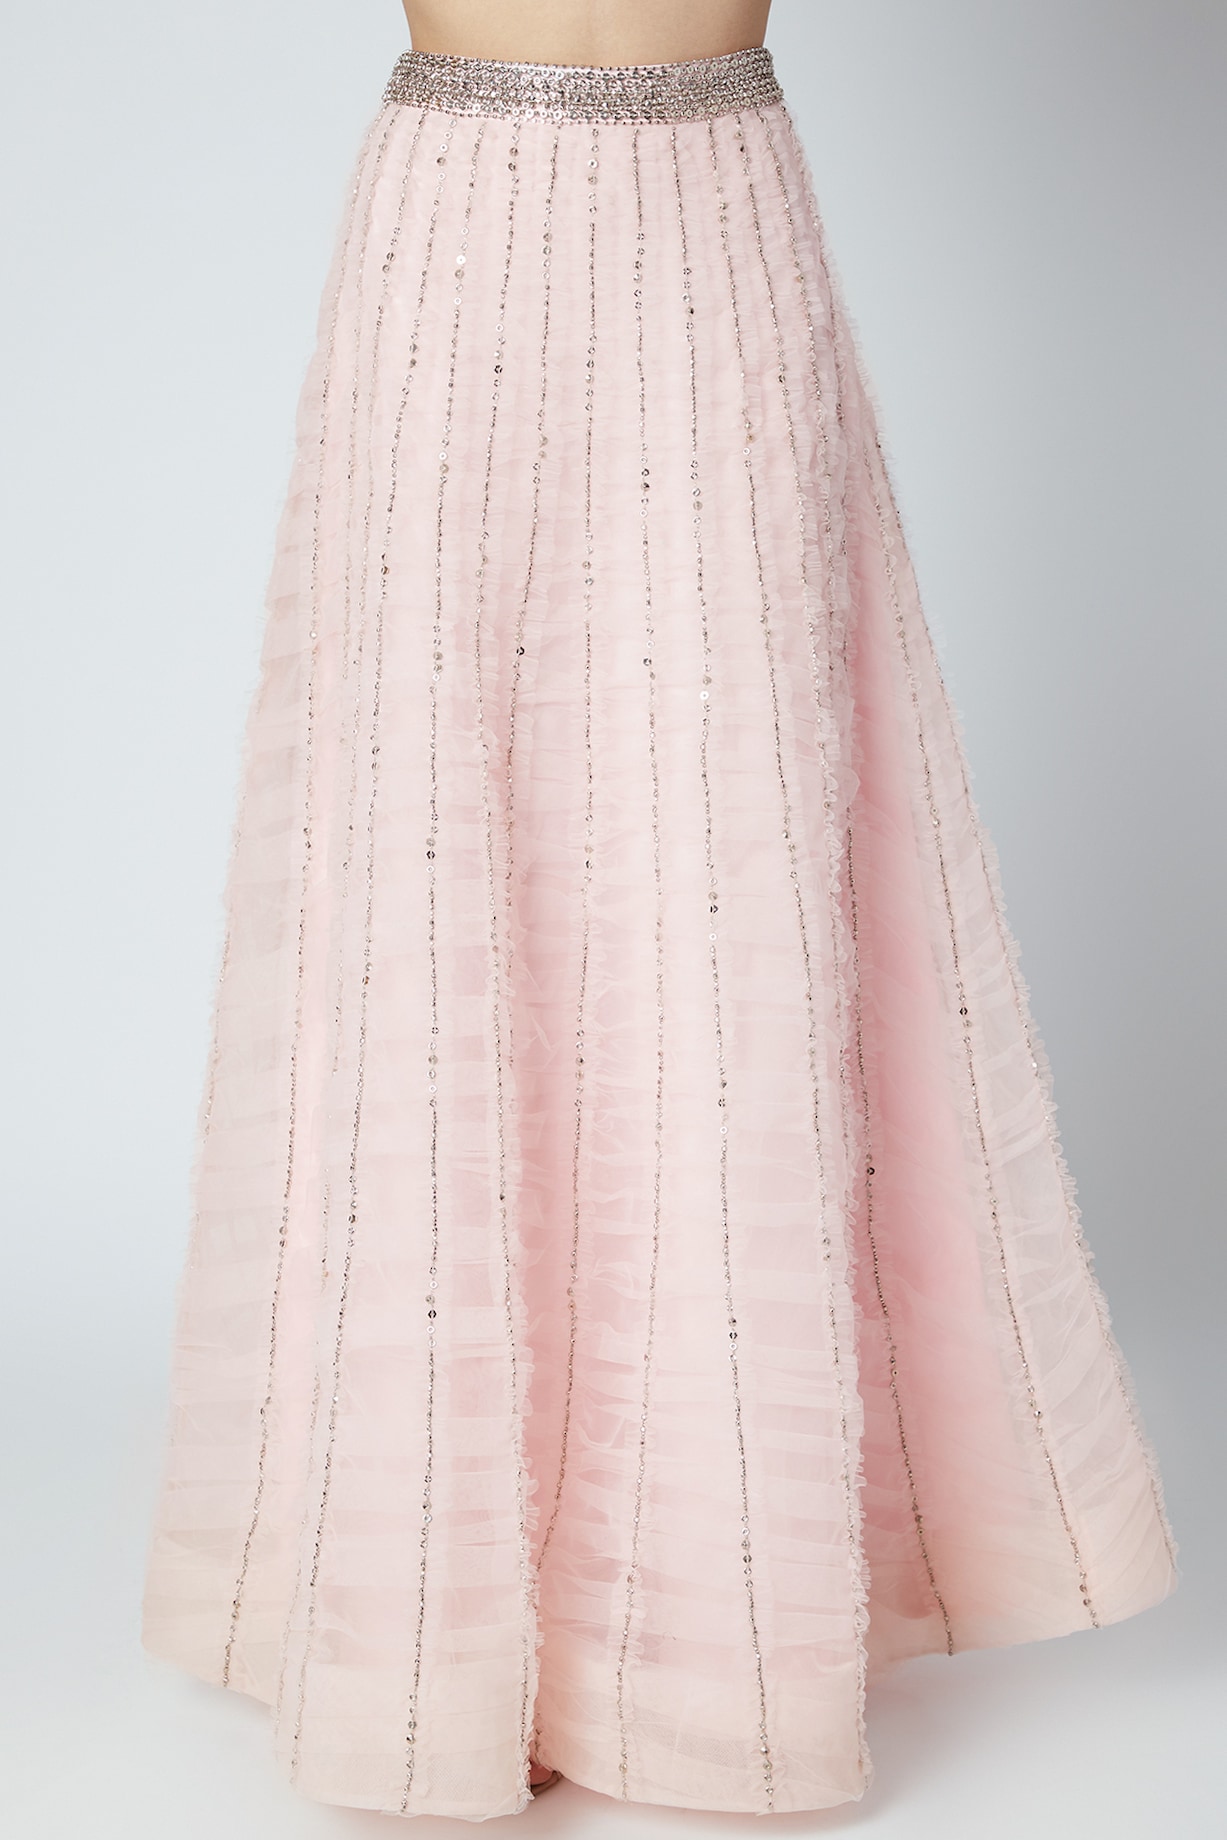 Blush Pink Embroidered Lehenga With Ruffled Blouse Design by Shivangi Jain  at Pernia's Pop Up Shop 2024